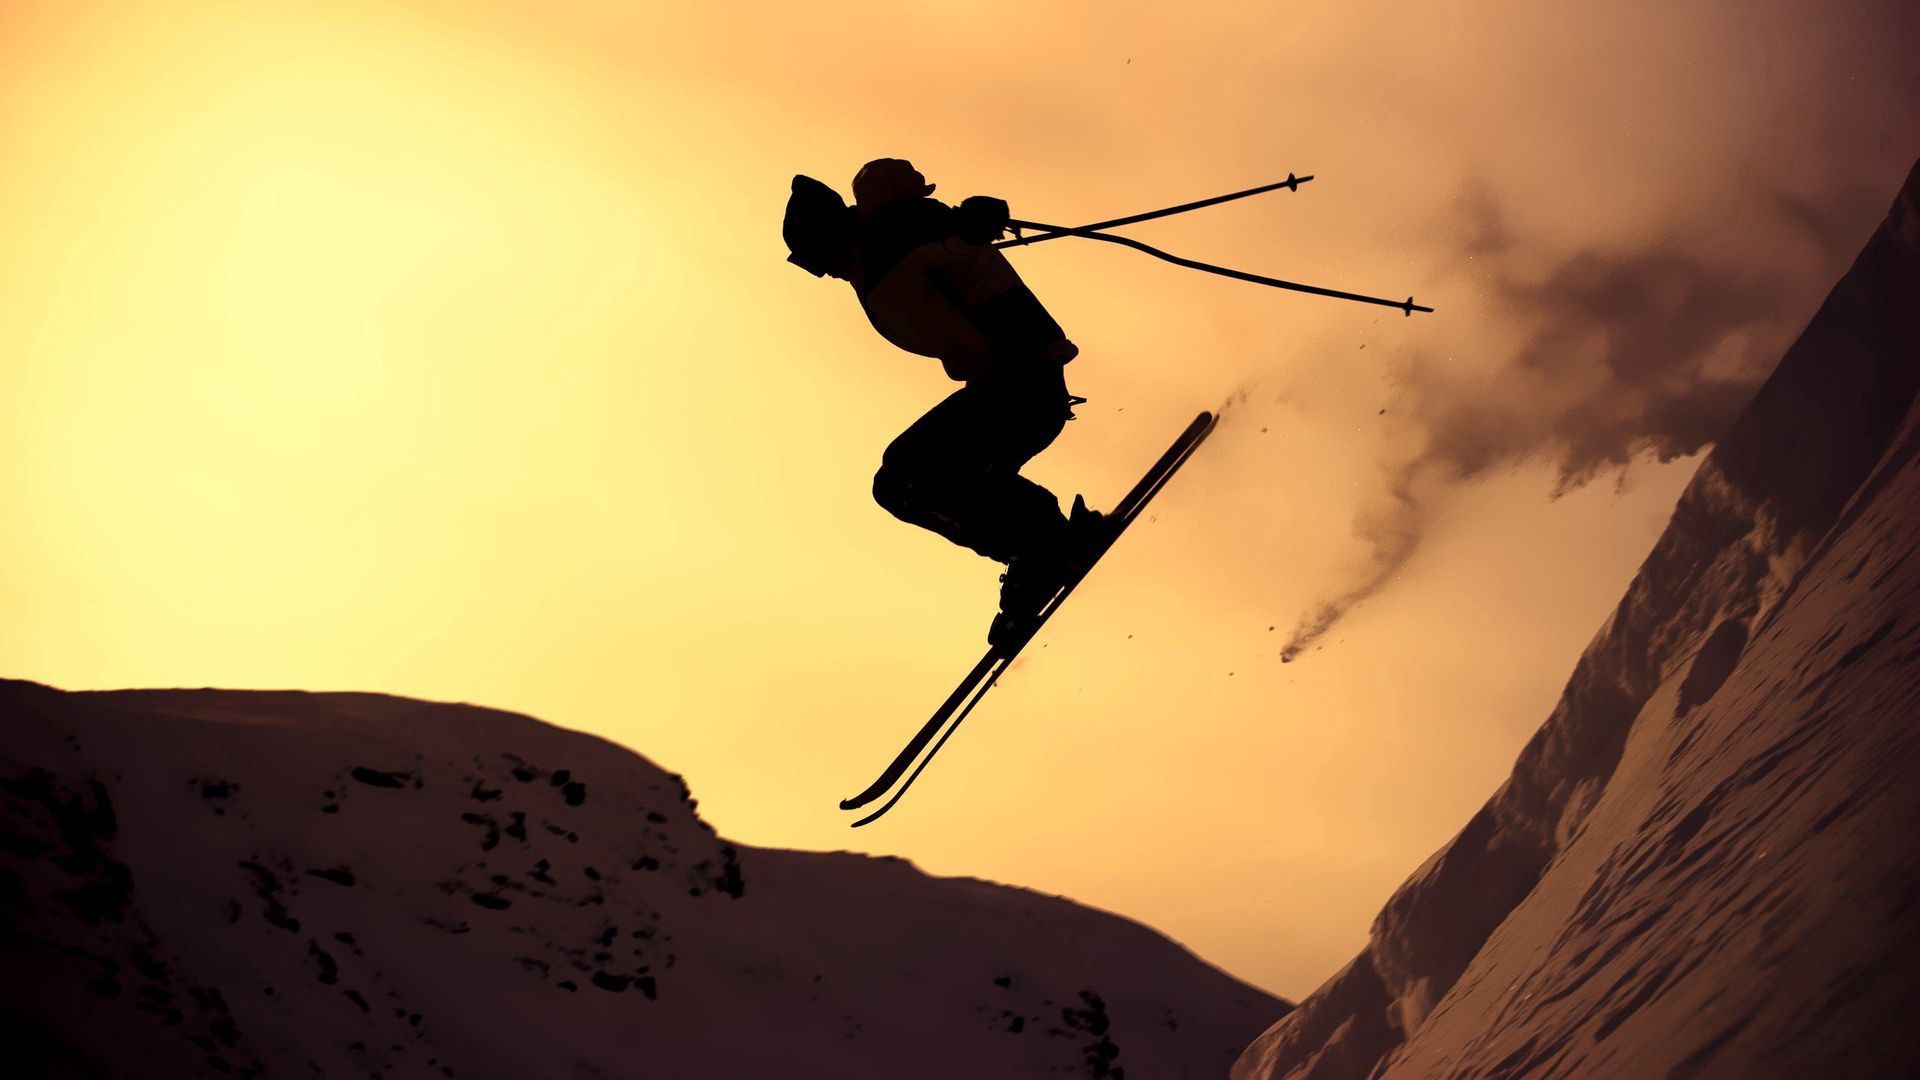 Descarga gratuita de fondo de pantalla para móvil de Nieve, Silueta, Saltar, Esquí Alpino, Extremo, Esquiar, Rebotar, Deportes.